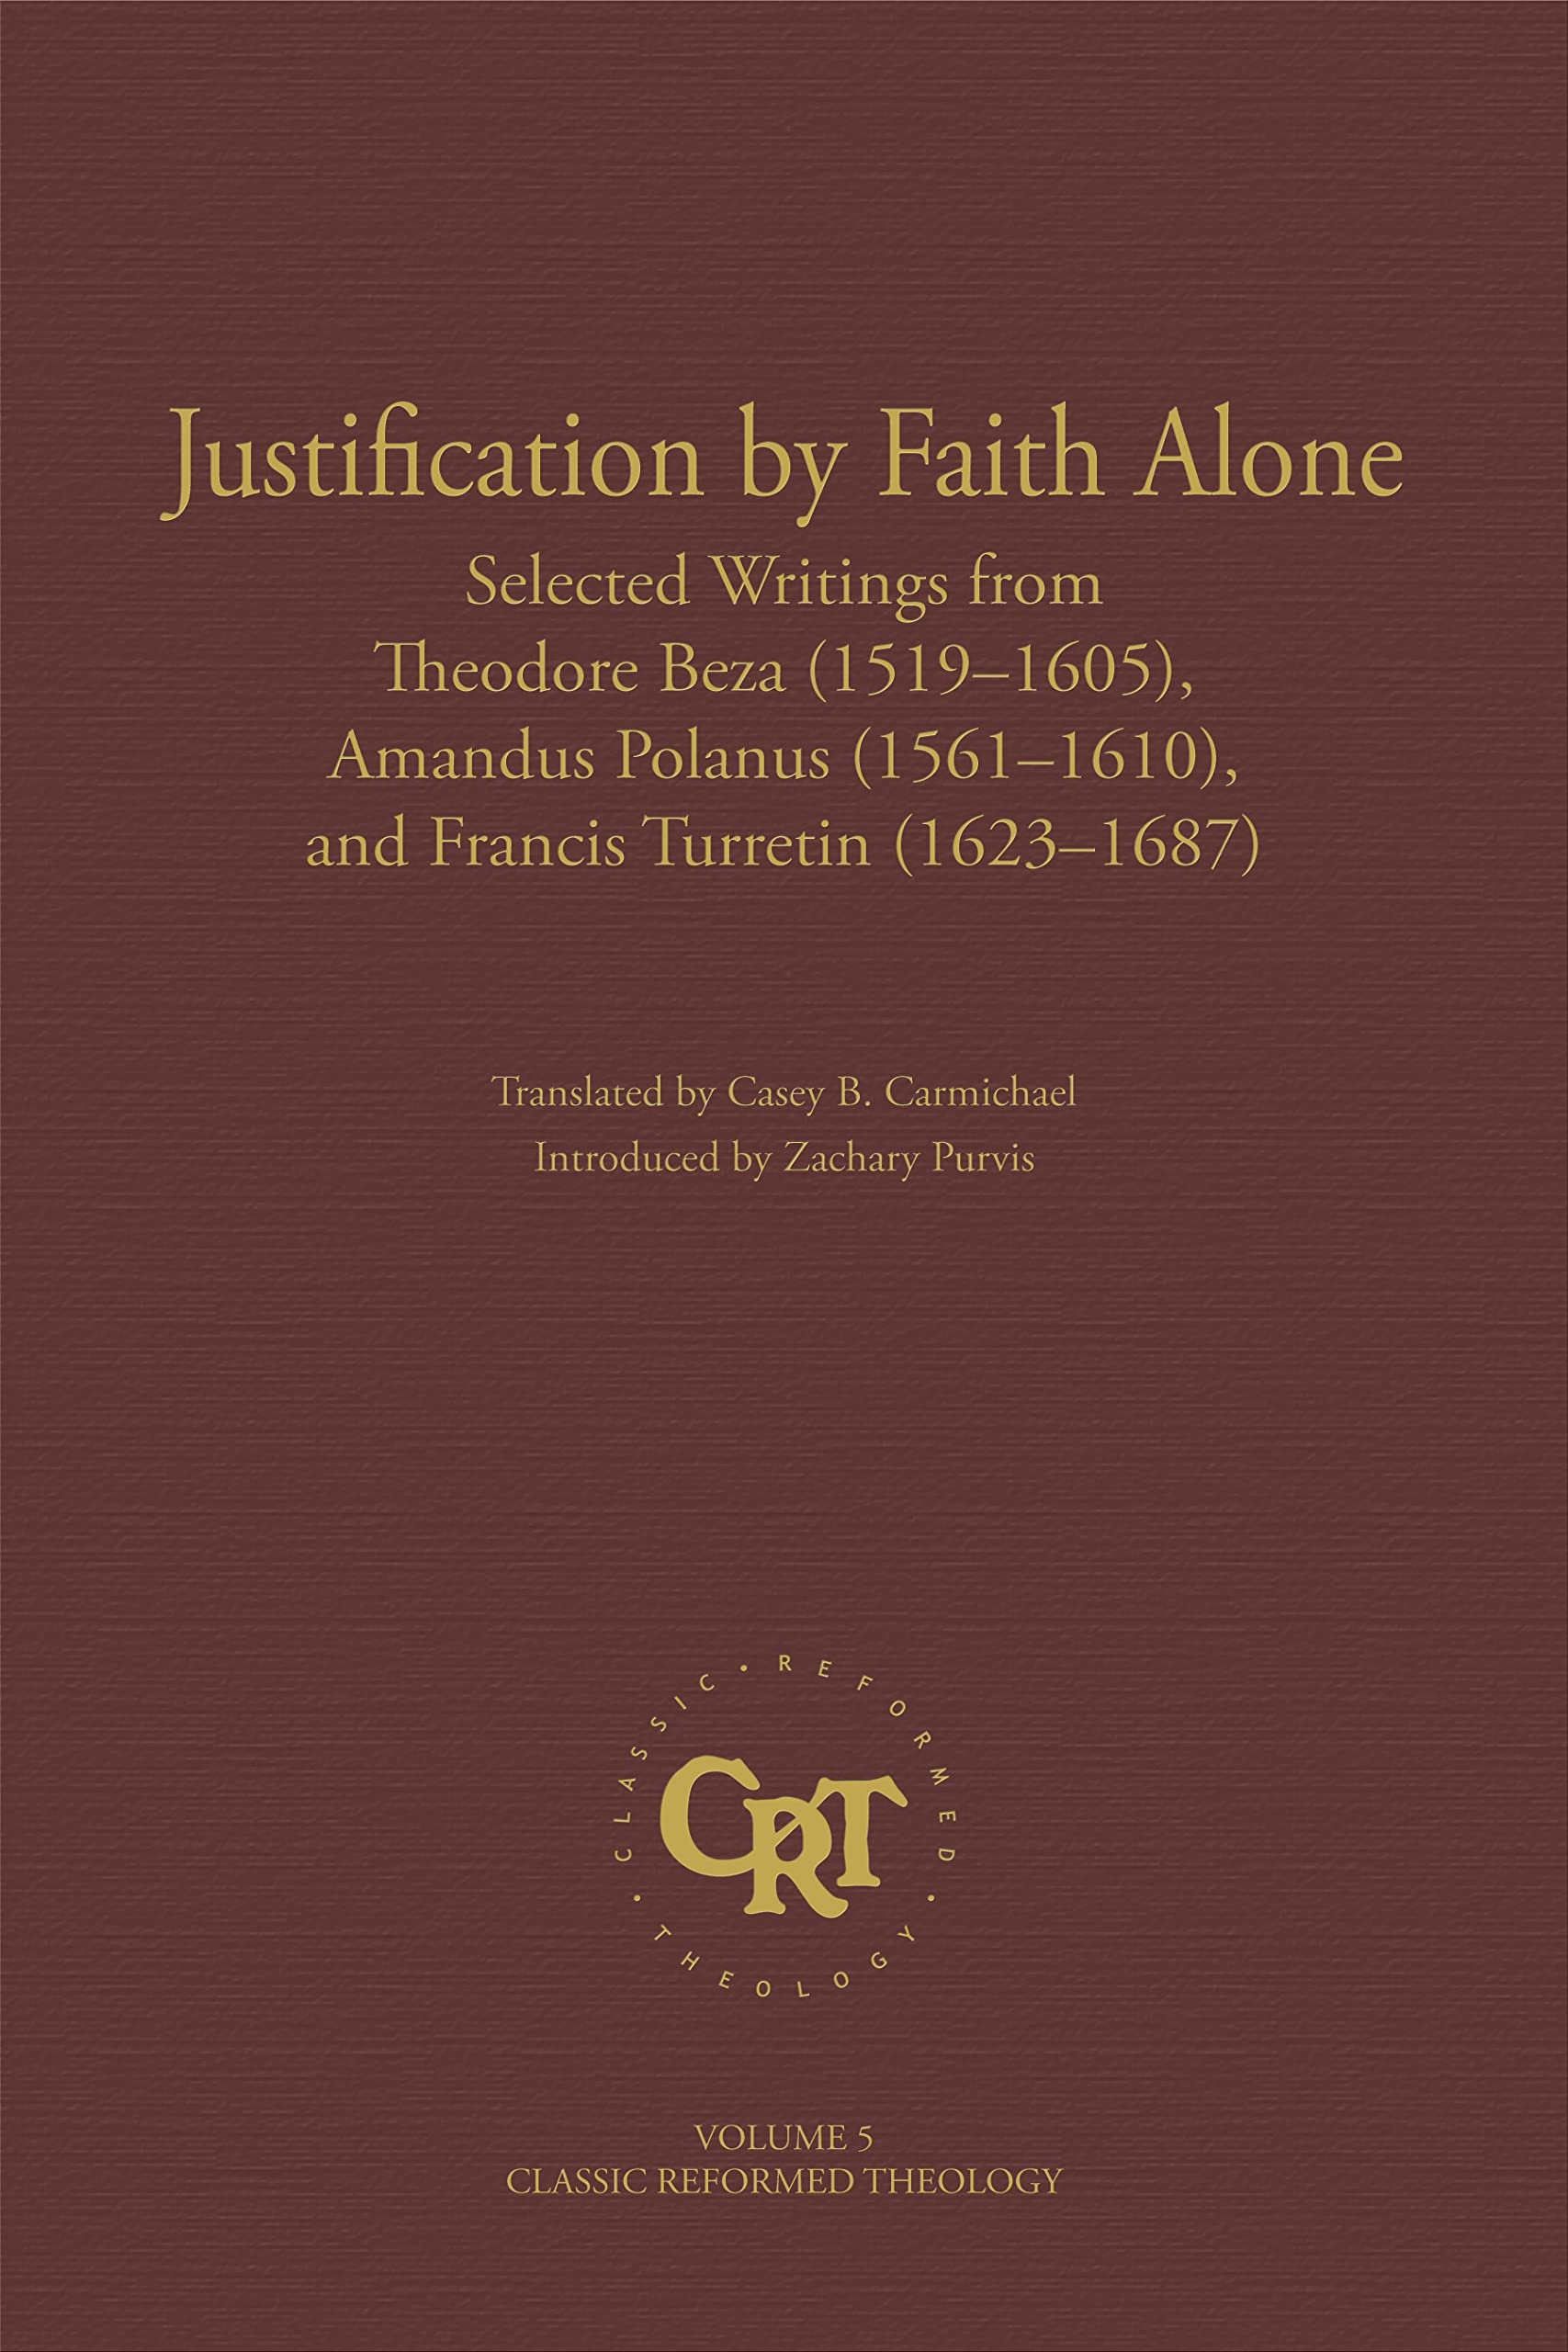 Book Notice: JUSTIFICATION BY FAITH ALONE, by Theodore Beza, Amandus Polanus, and Francis Turretin